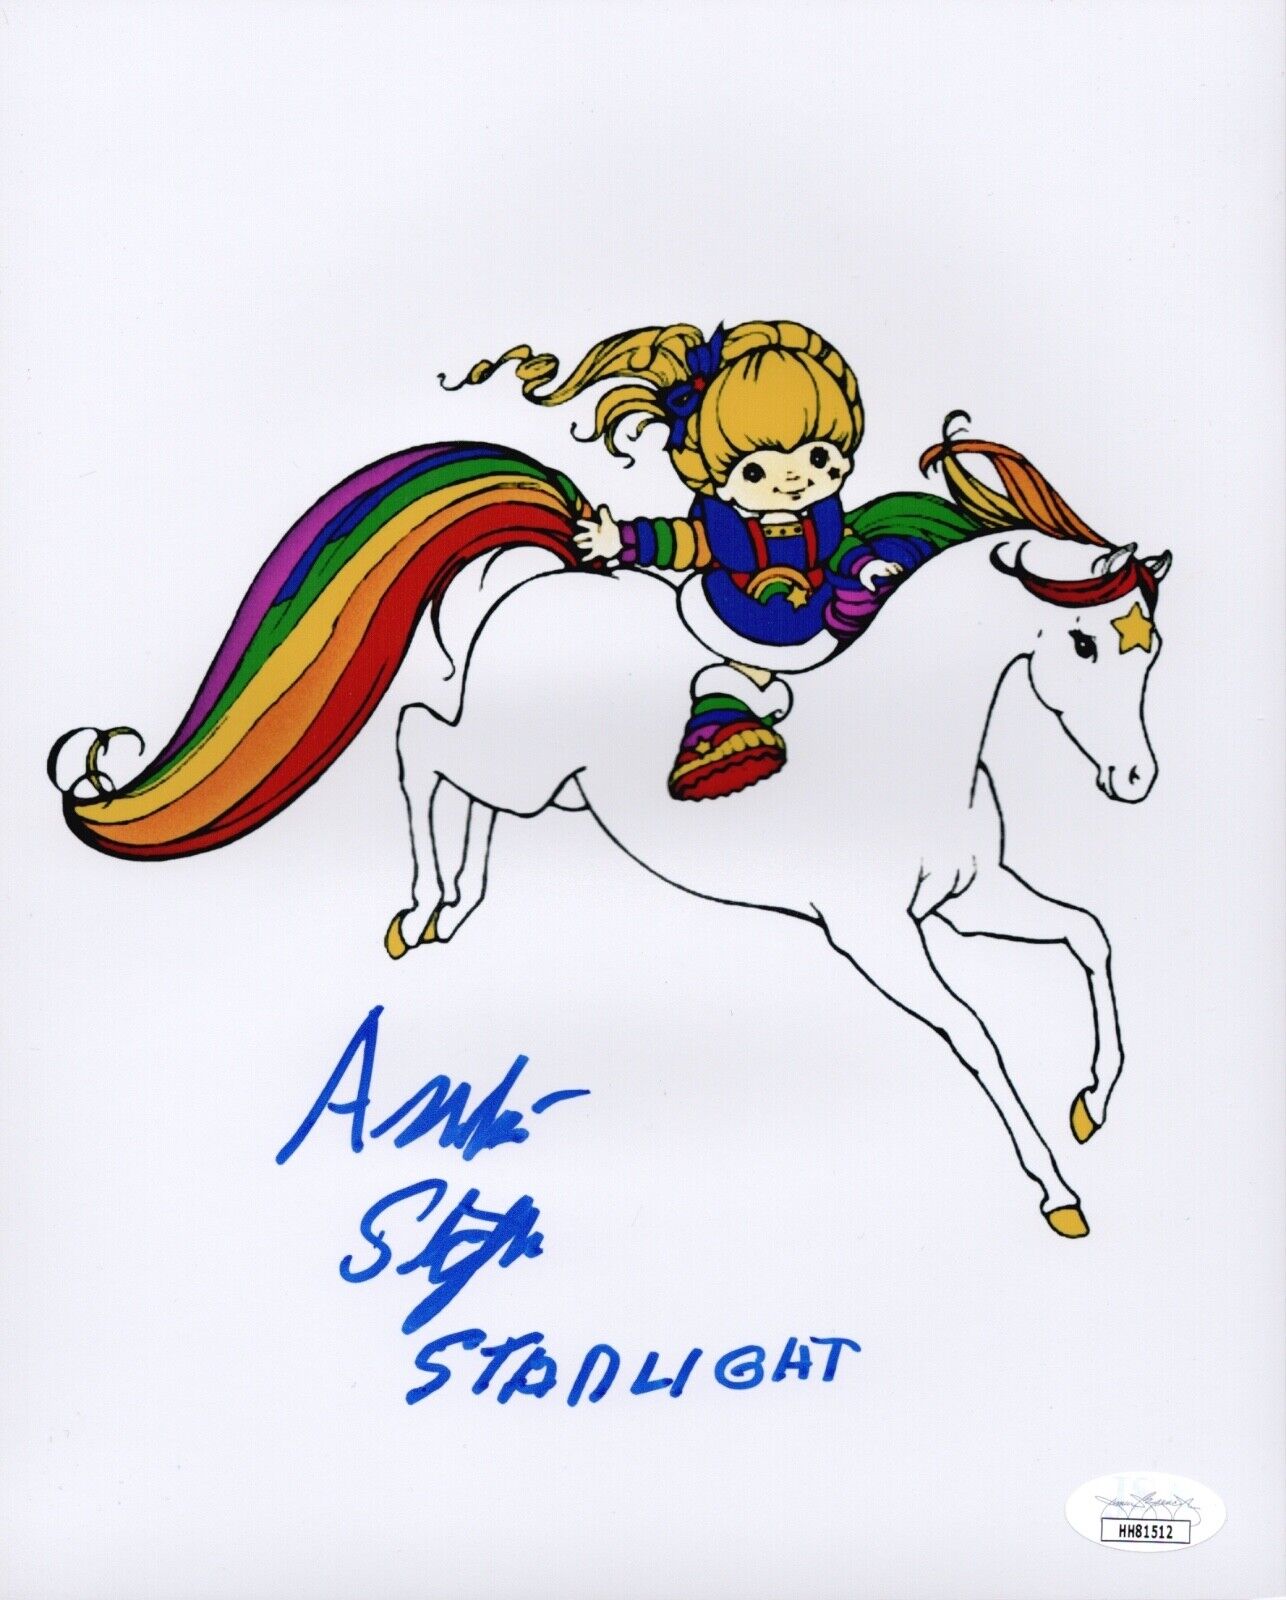 ANDRE STOJKA Signed 8x10 Photo Poster painting STARLIGHT Rainbow Bright Autograph JSA COA Cert